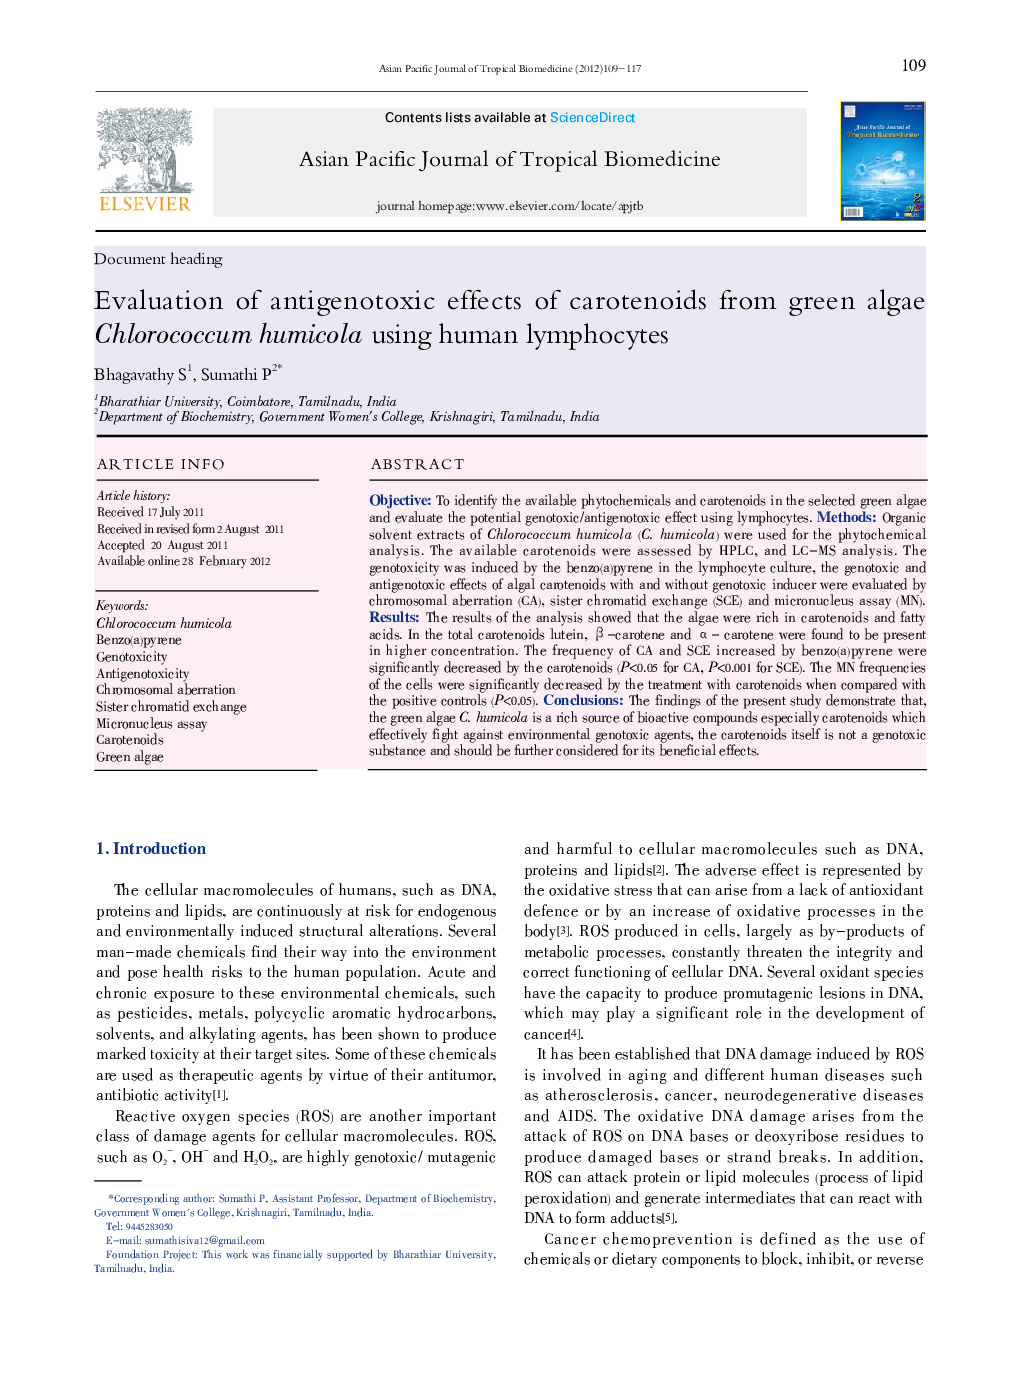 Evaluation of antigenotoxic effects of carotenoids from green algae Chlorococcum humicola using human lymphocytes